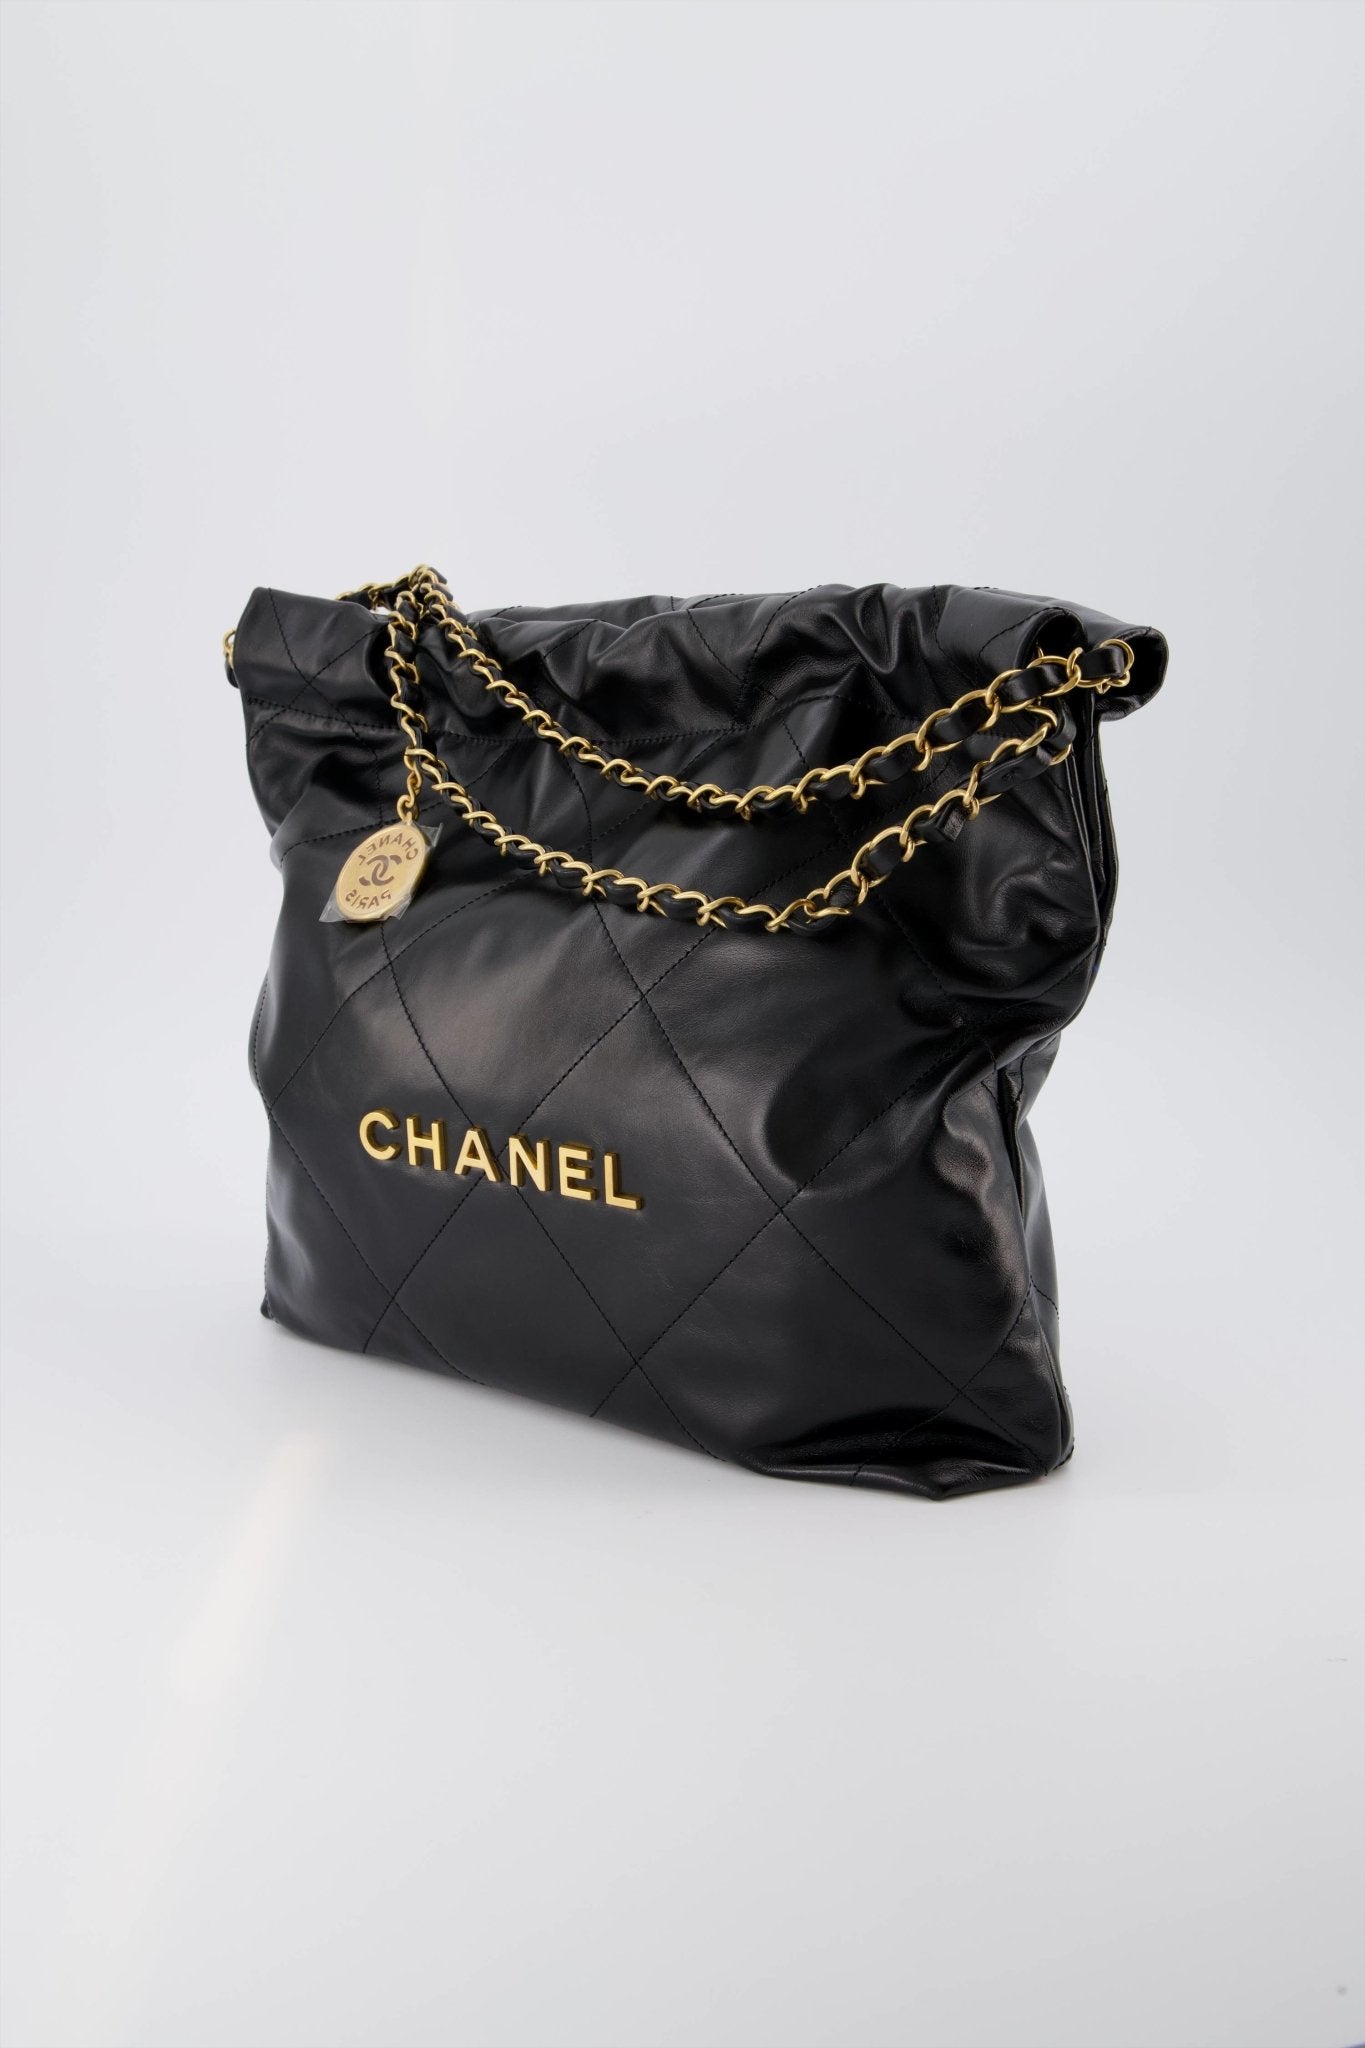 Chanel Chanel 22 Small Tote Handbag